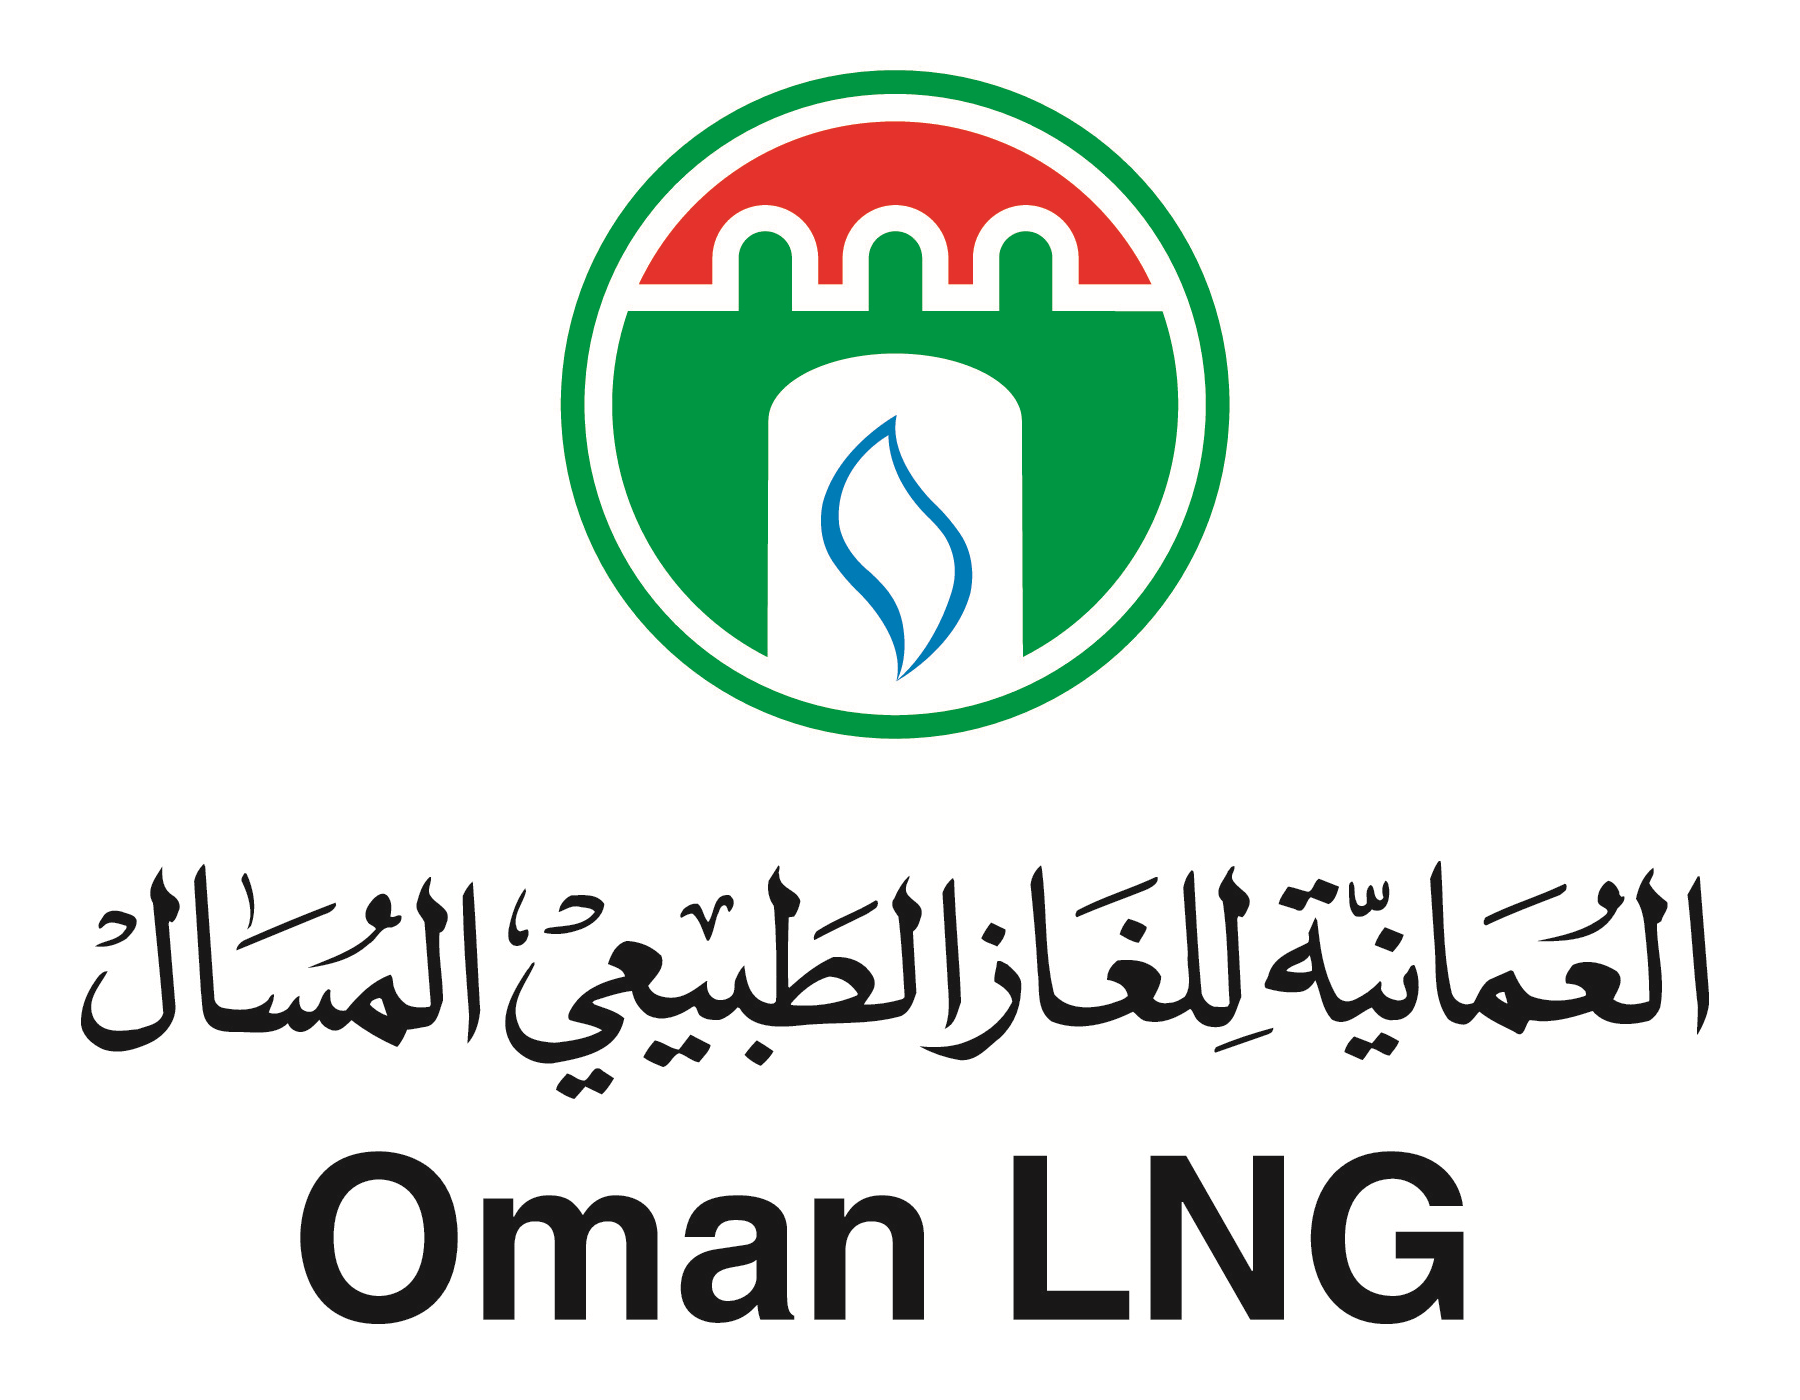 Oman-LNG